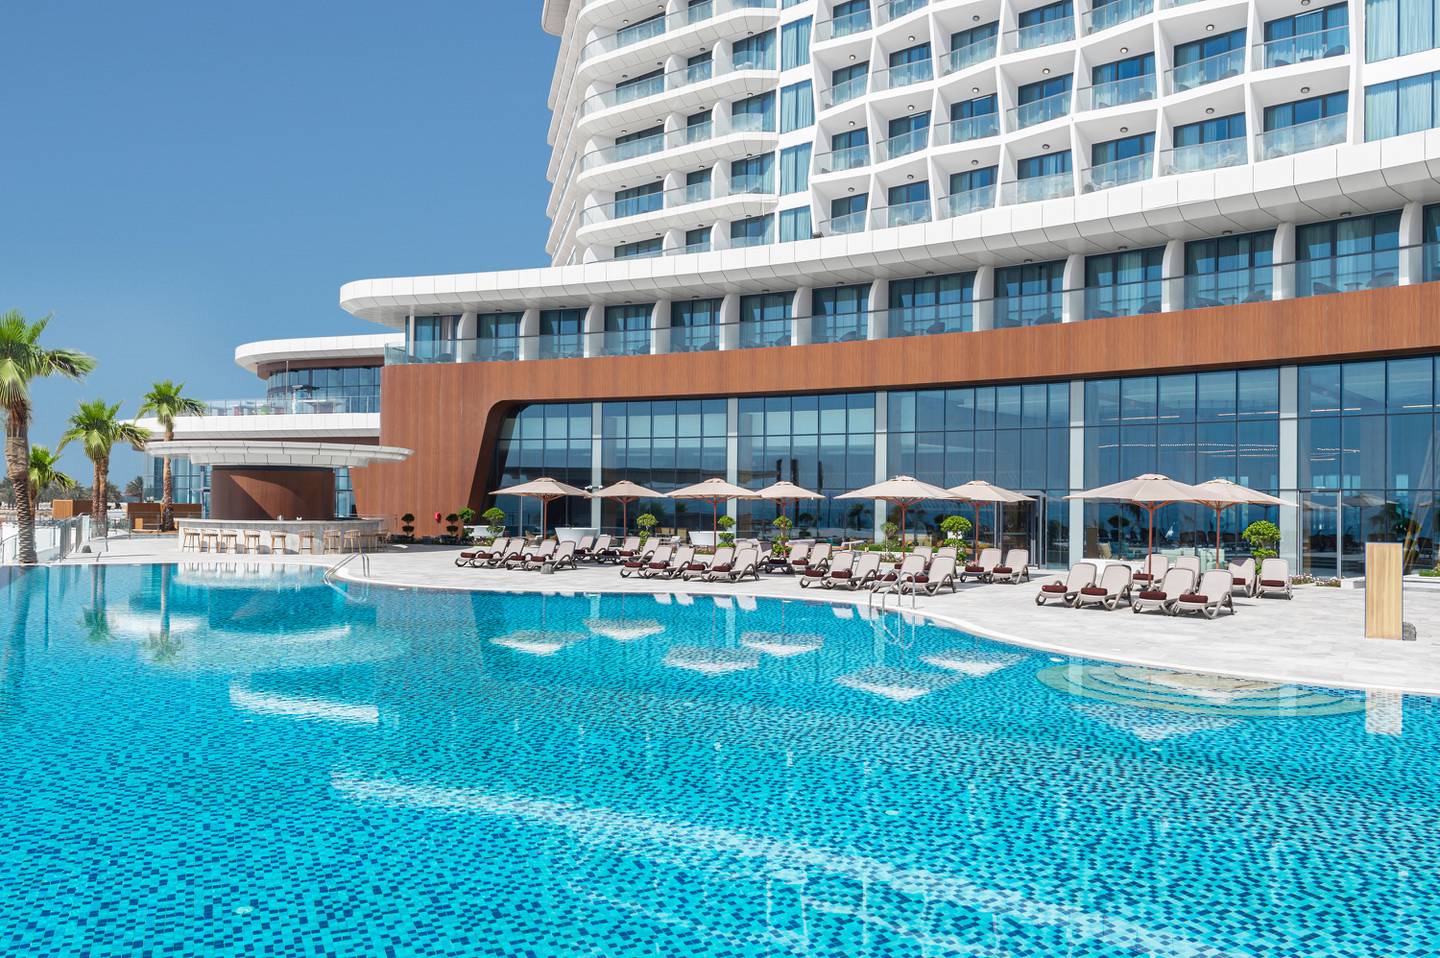 The newly opened Hampton by Hilton Marjan Island in Ras Al Khaimah has a large infinity pool overlooking the Arabian Gulf. Hilton